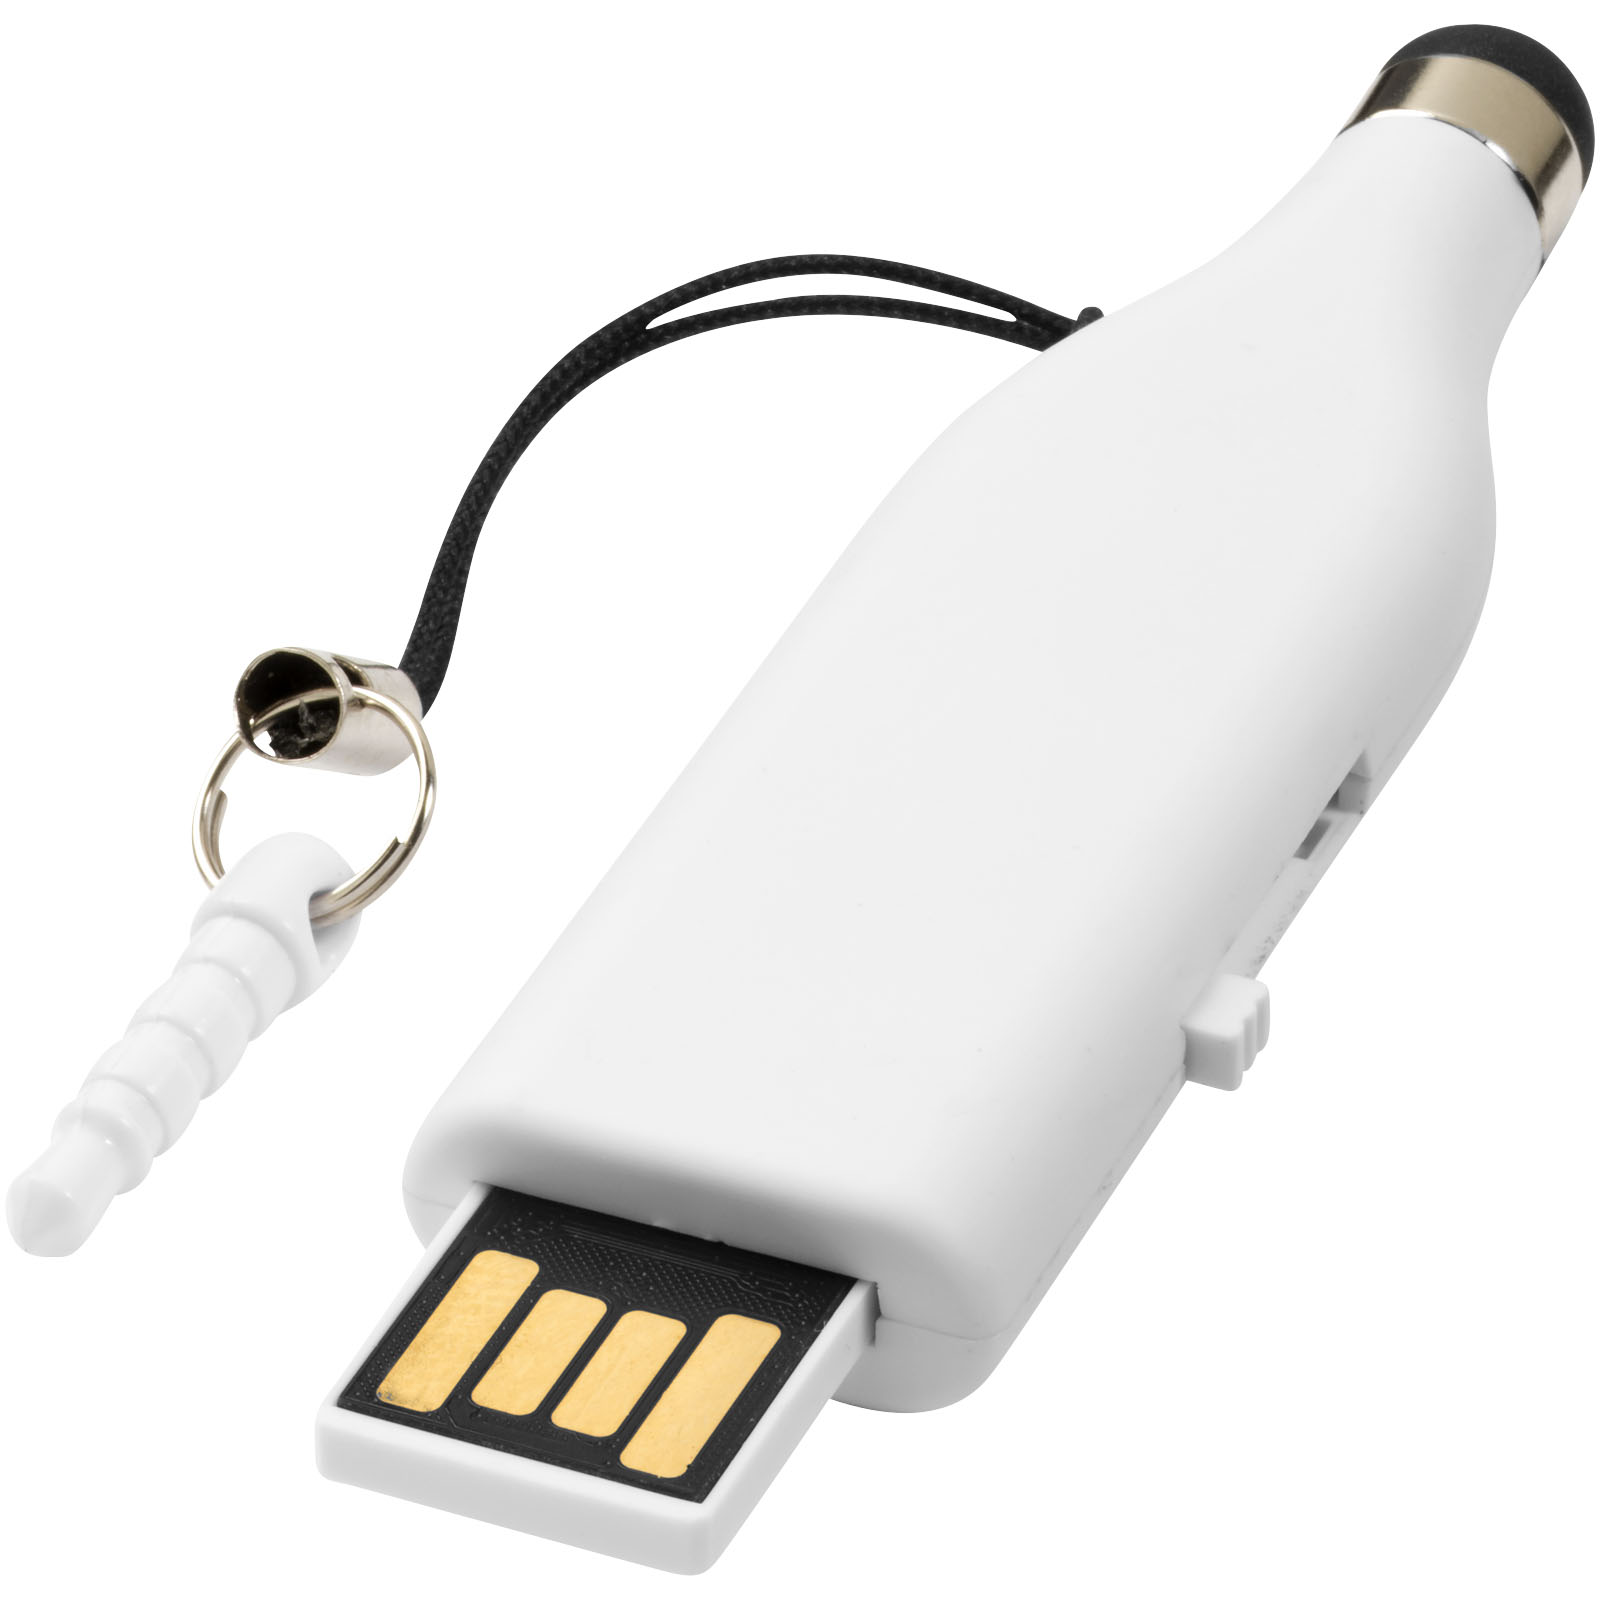 TouchPen USB